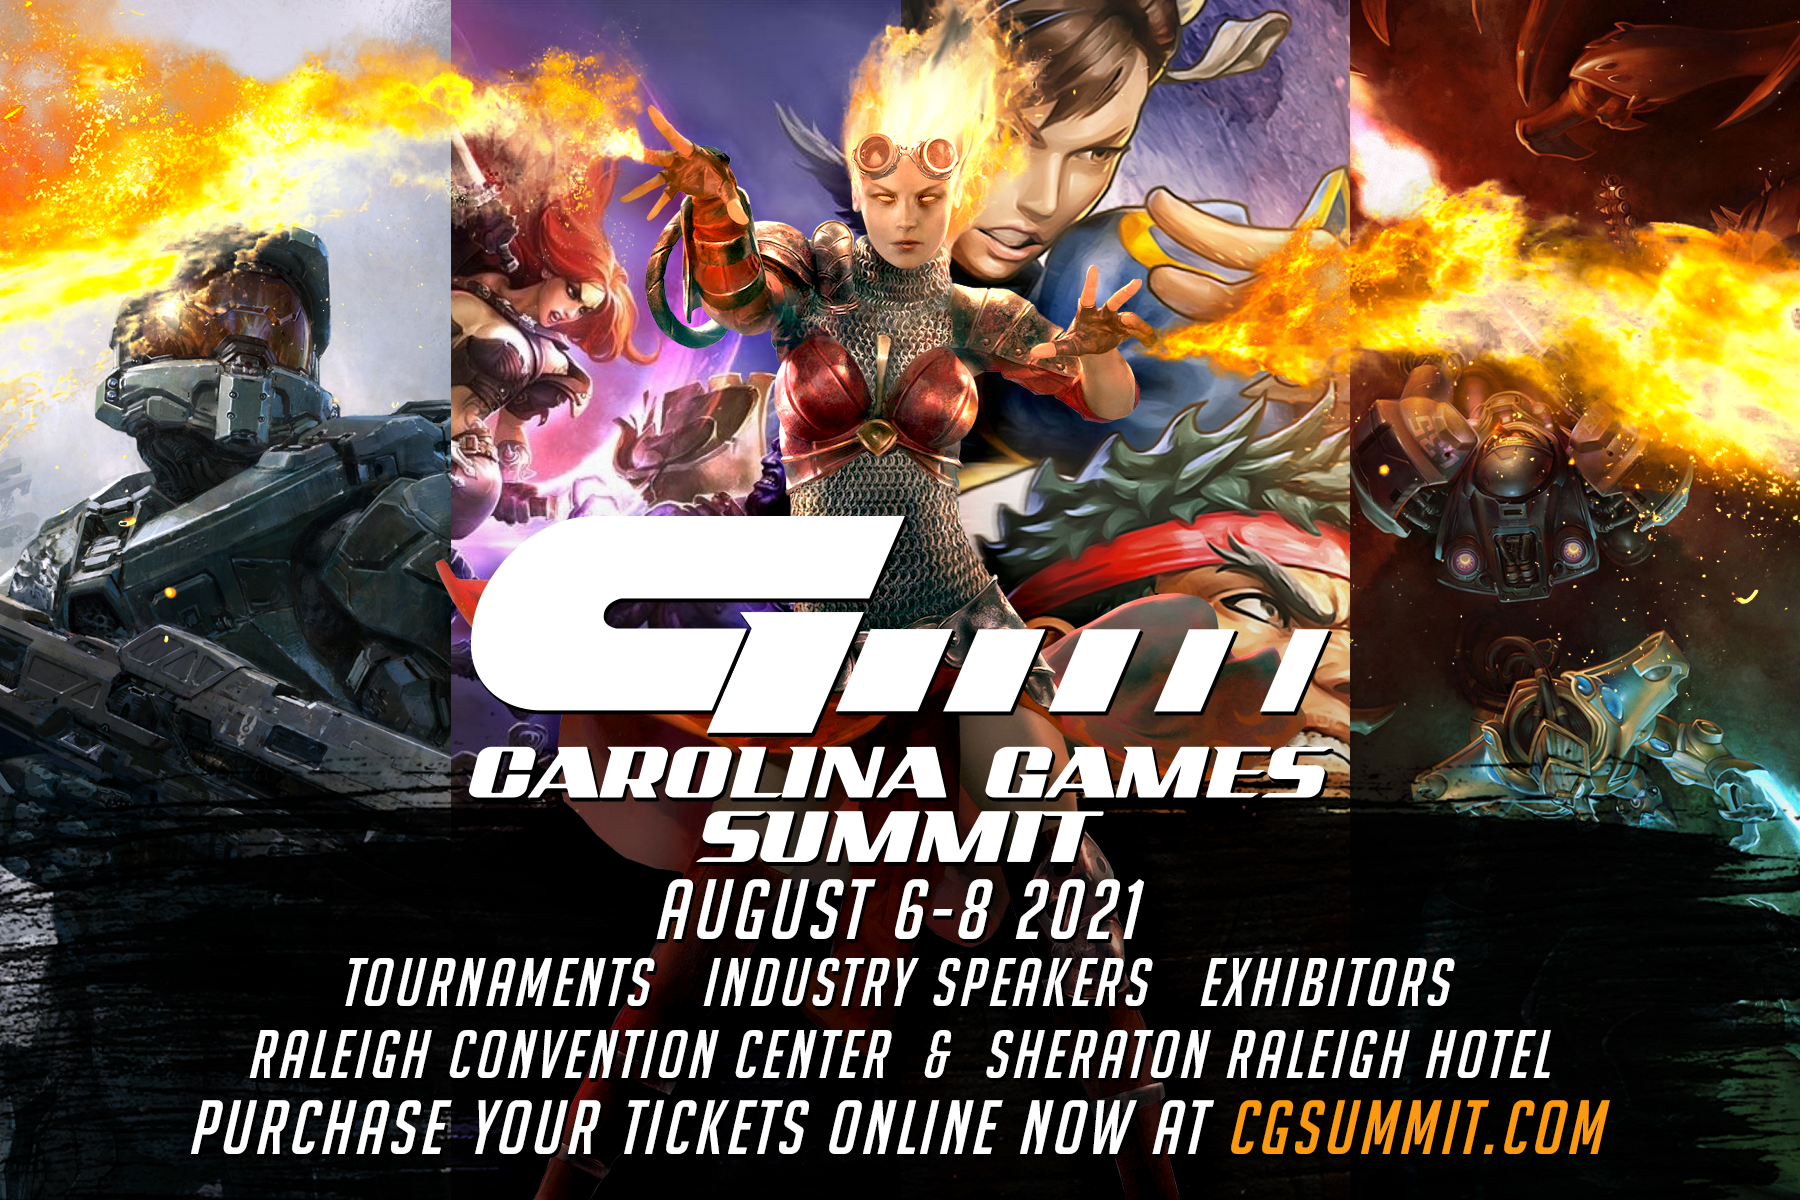 Carolina Games Summit 2021 Flyer